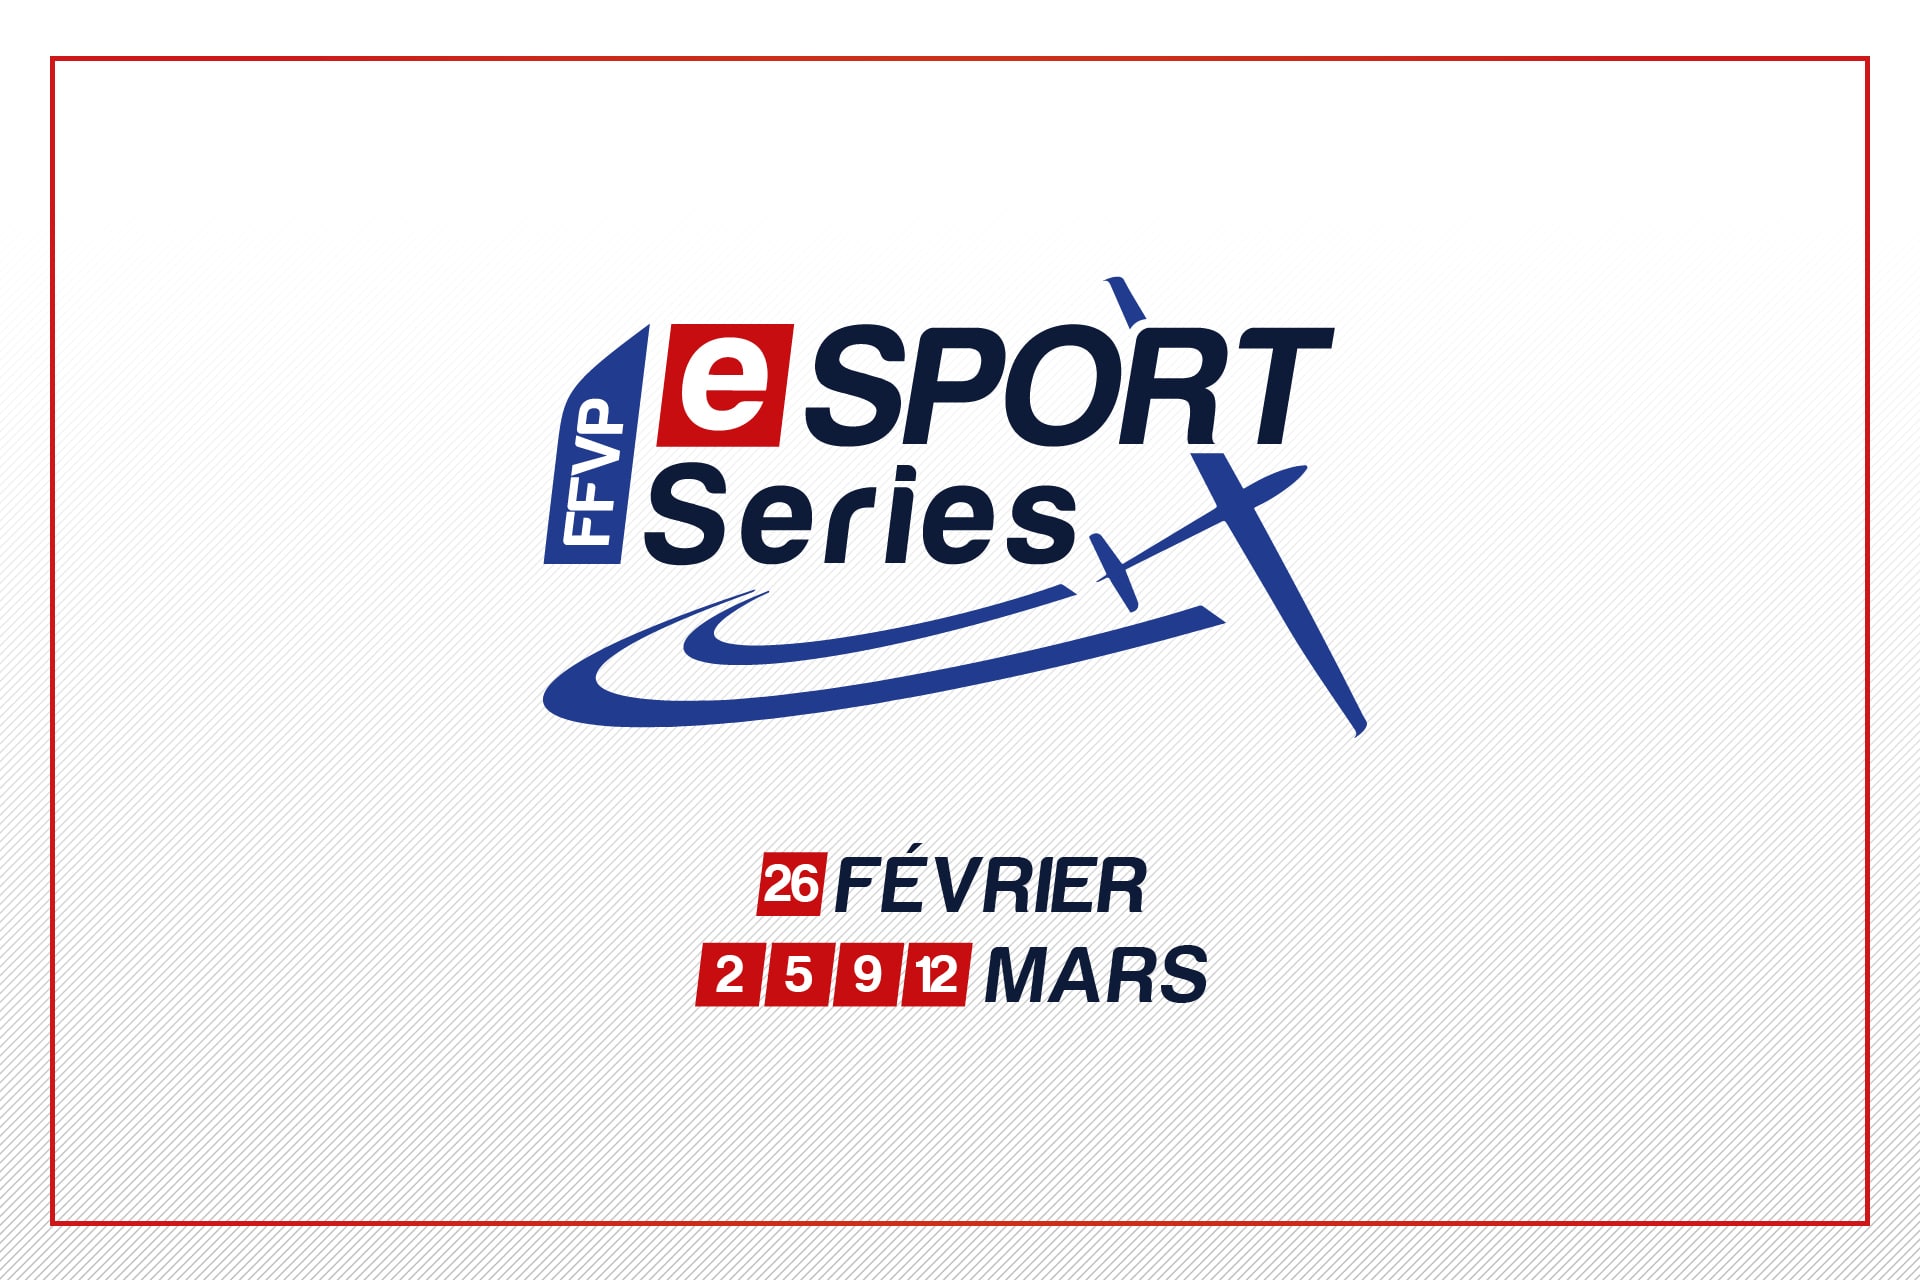 FFVP eSport Series – Résultats